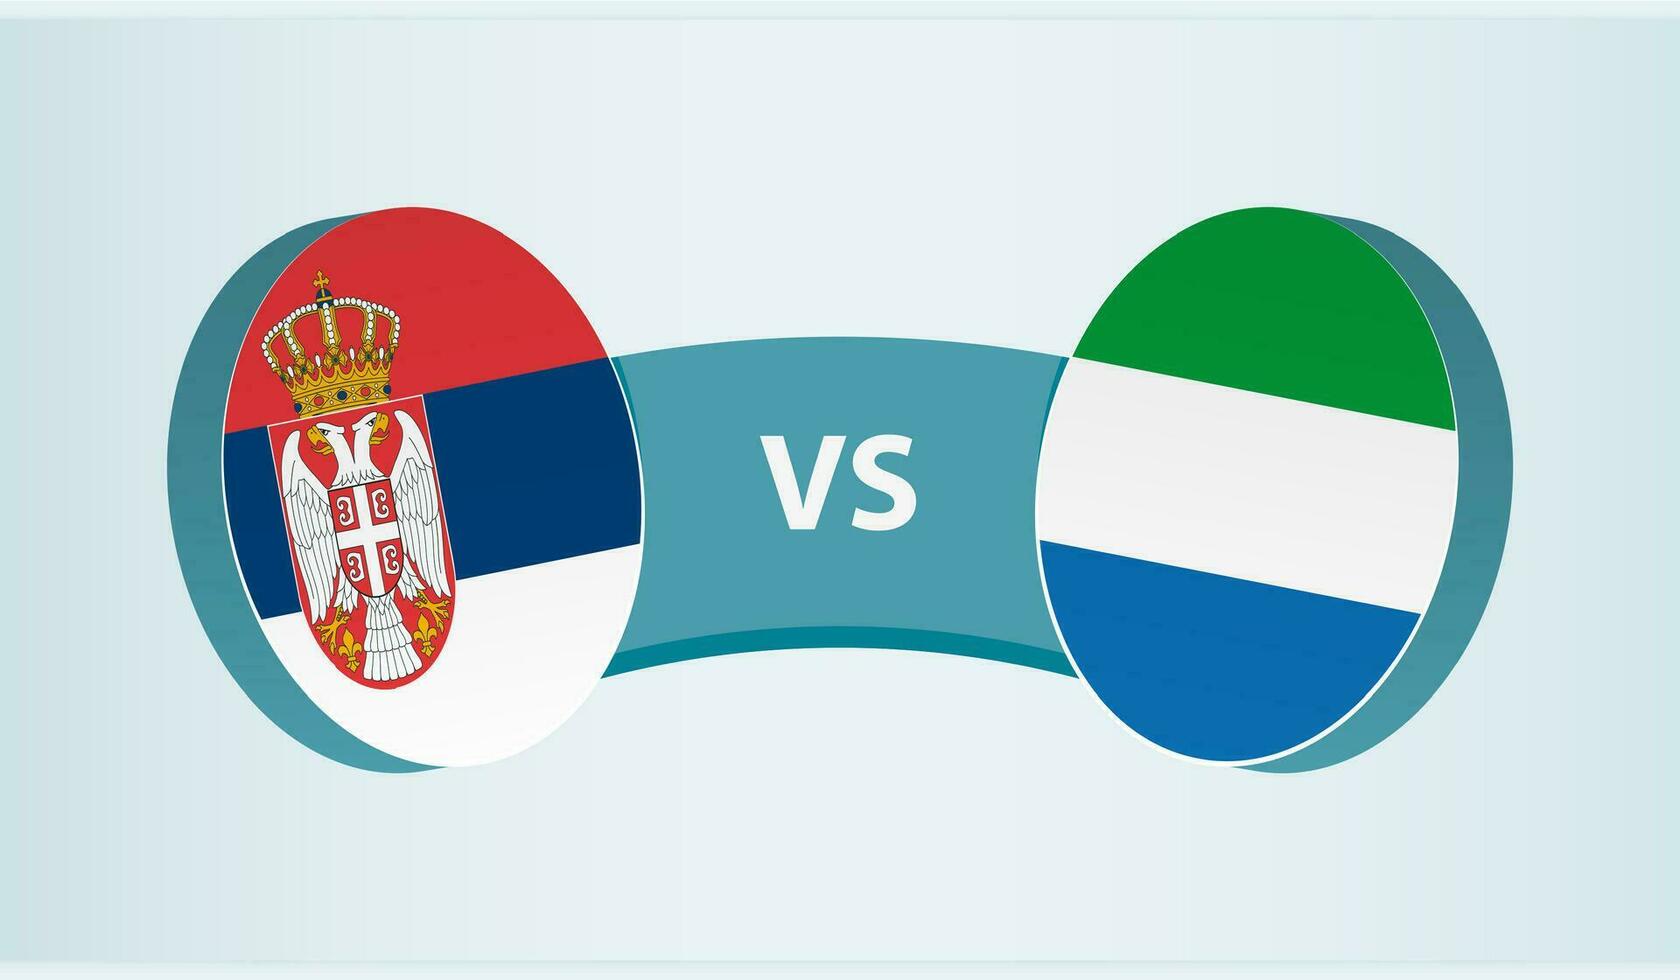 Serbia versus Sierra Leone, team sports competition concept. vector